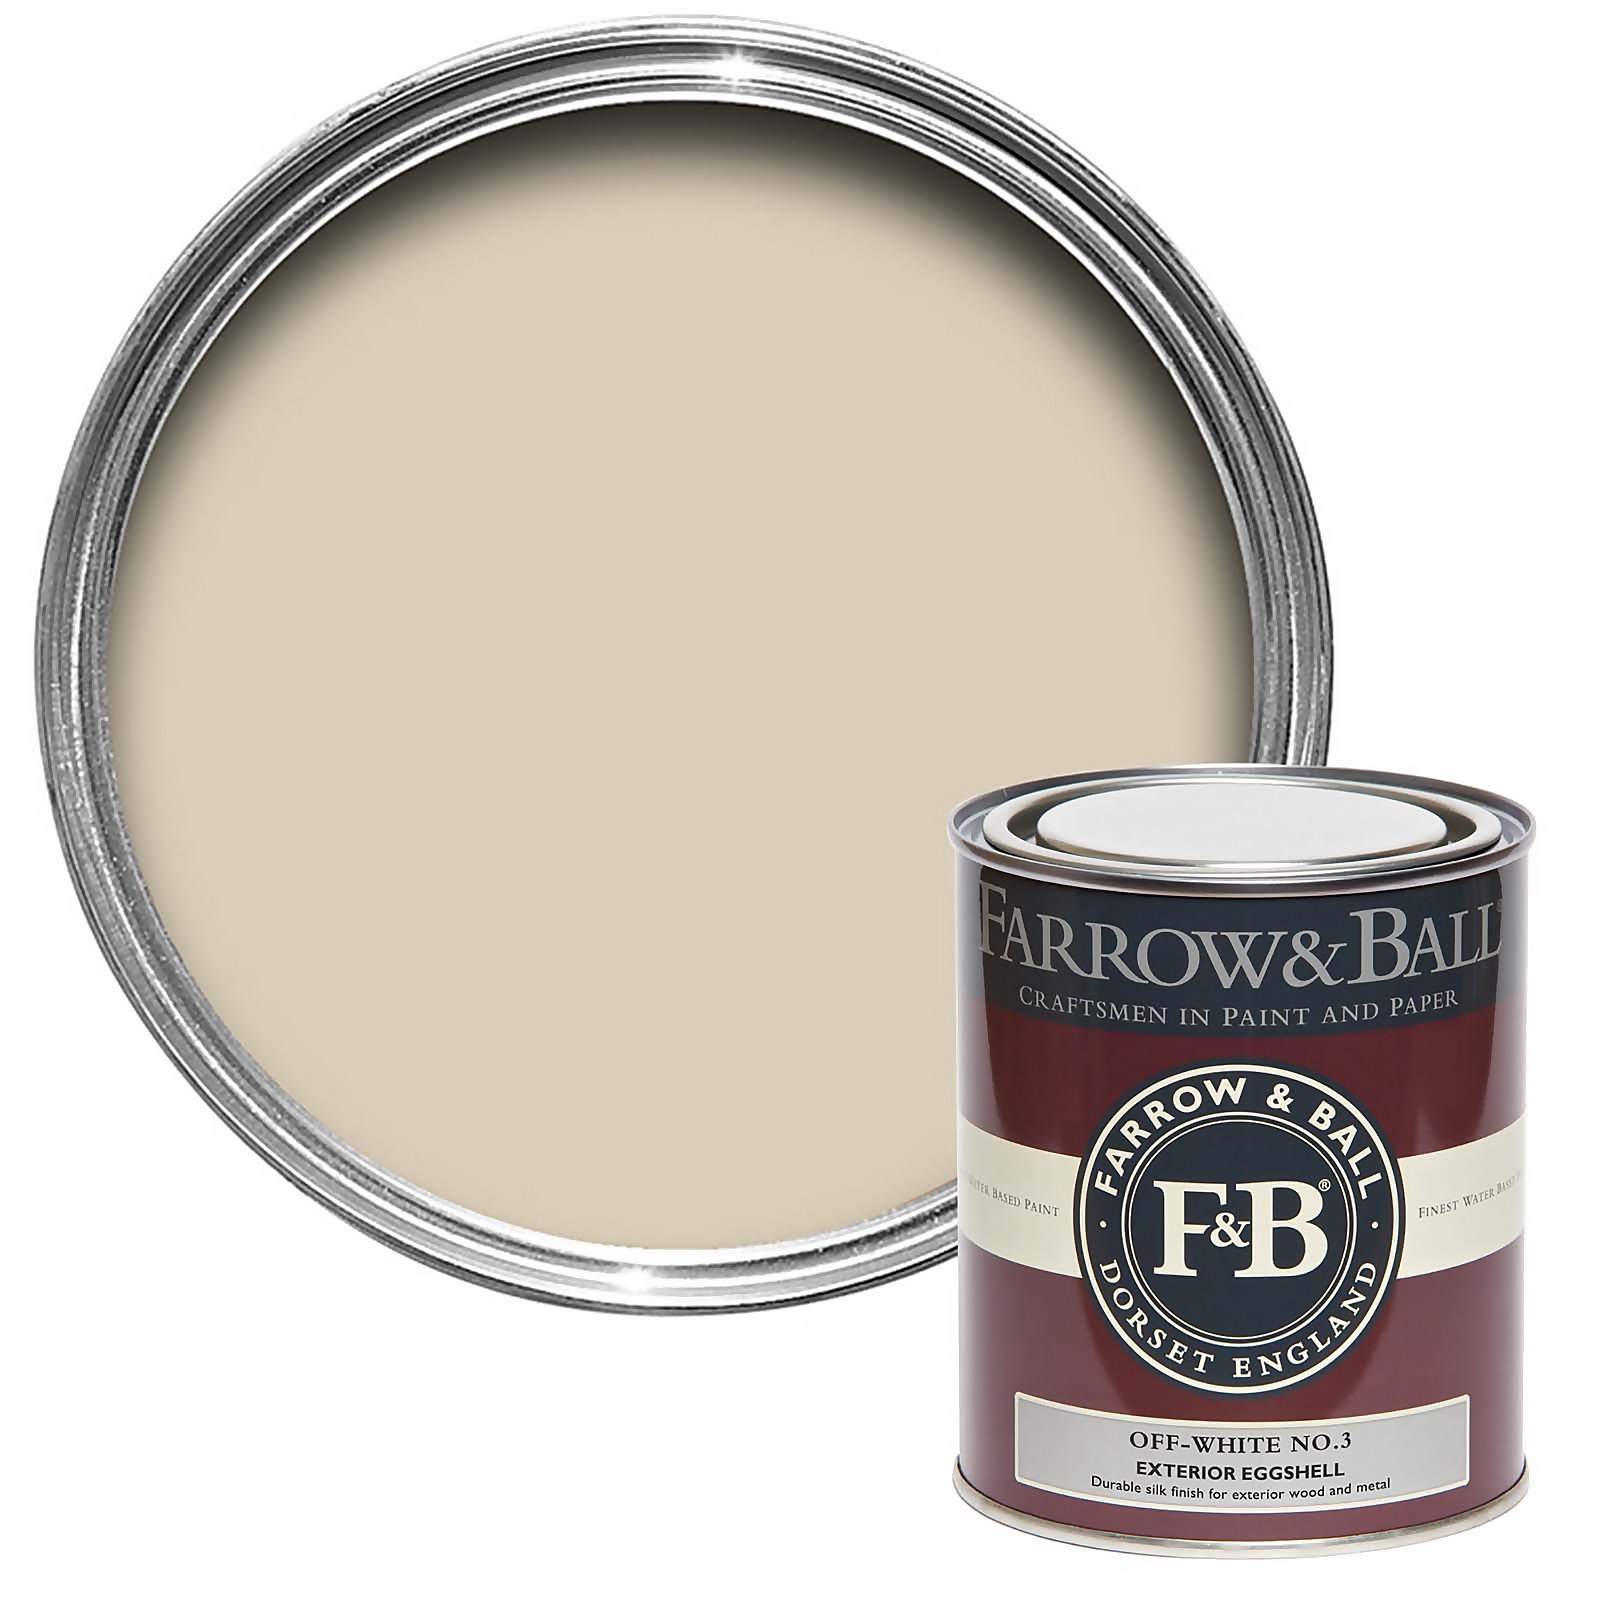 Farrow & Ball Exterior Eggshell Paint Off-White No.3 - 750ml